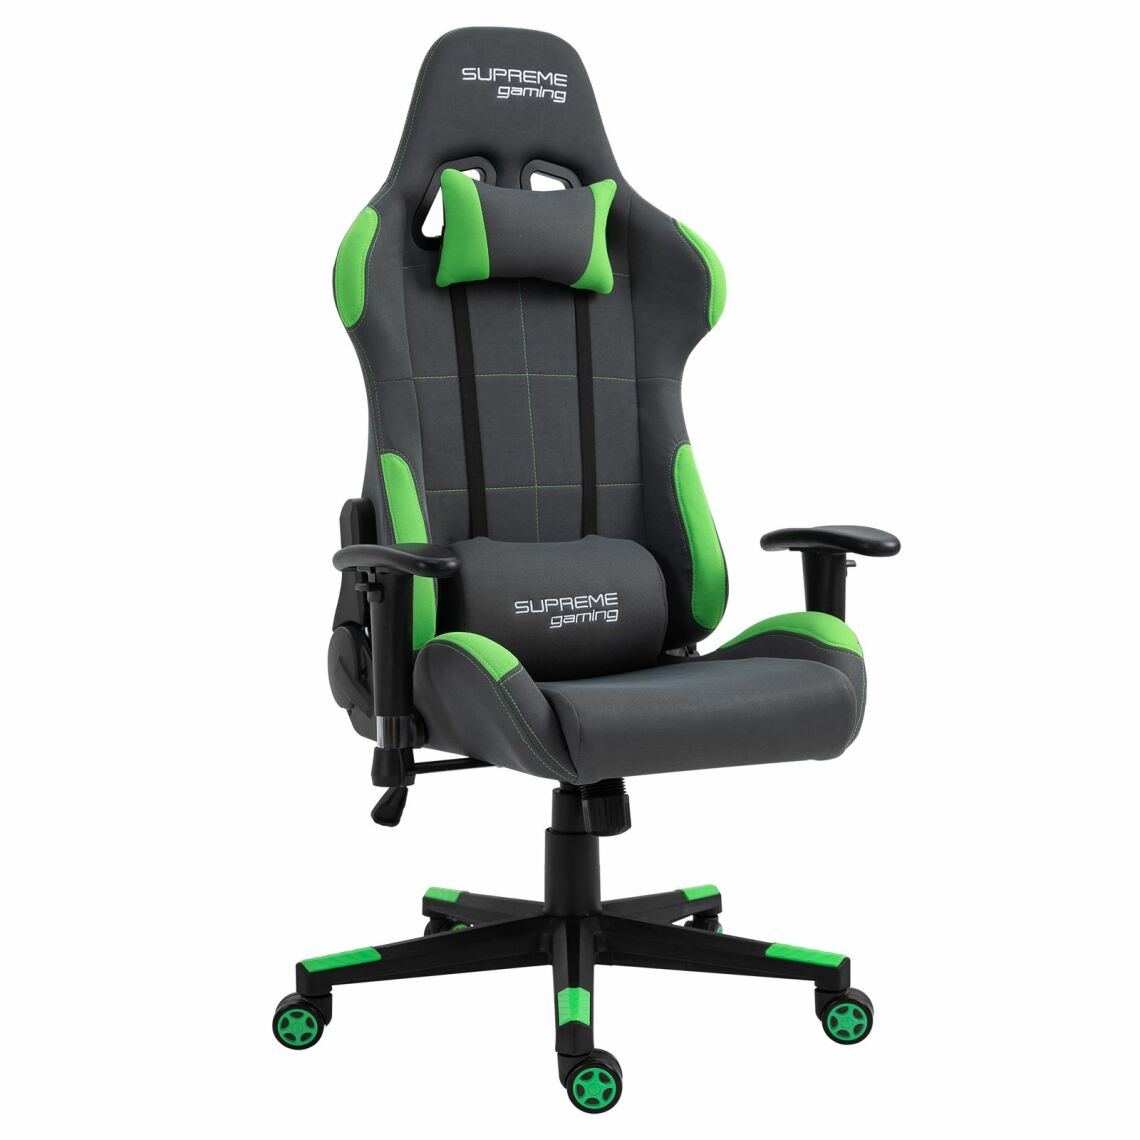 Idimex - Chaise de bureau gaming SWIFT, revêtement en tissu gris et vert - Chaise gamer